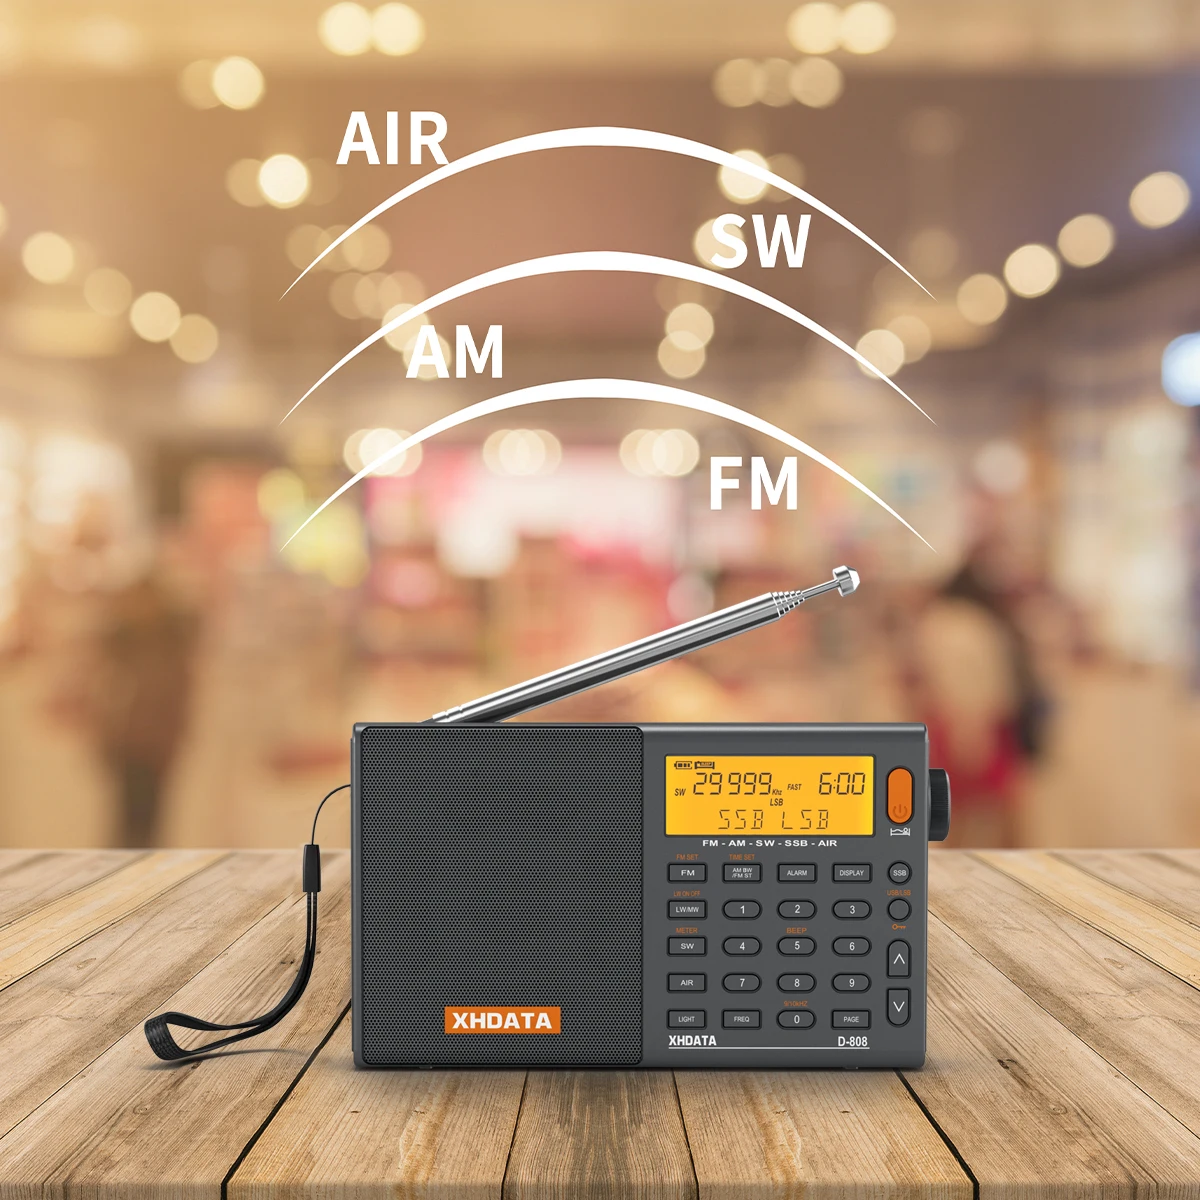 XHDATA-Récepteur radio D808, FM, AM, WM, SW, LW, SSB, AIR DSP, pleine bande, haute sensibilité, radio portable, radios de haute qualité